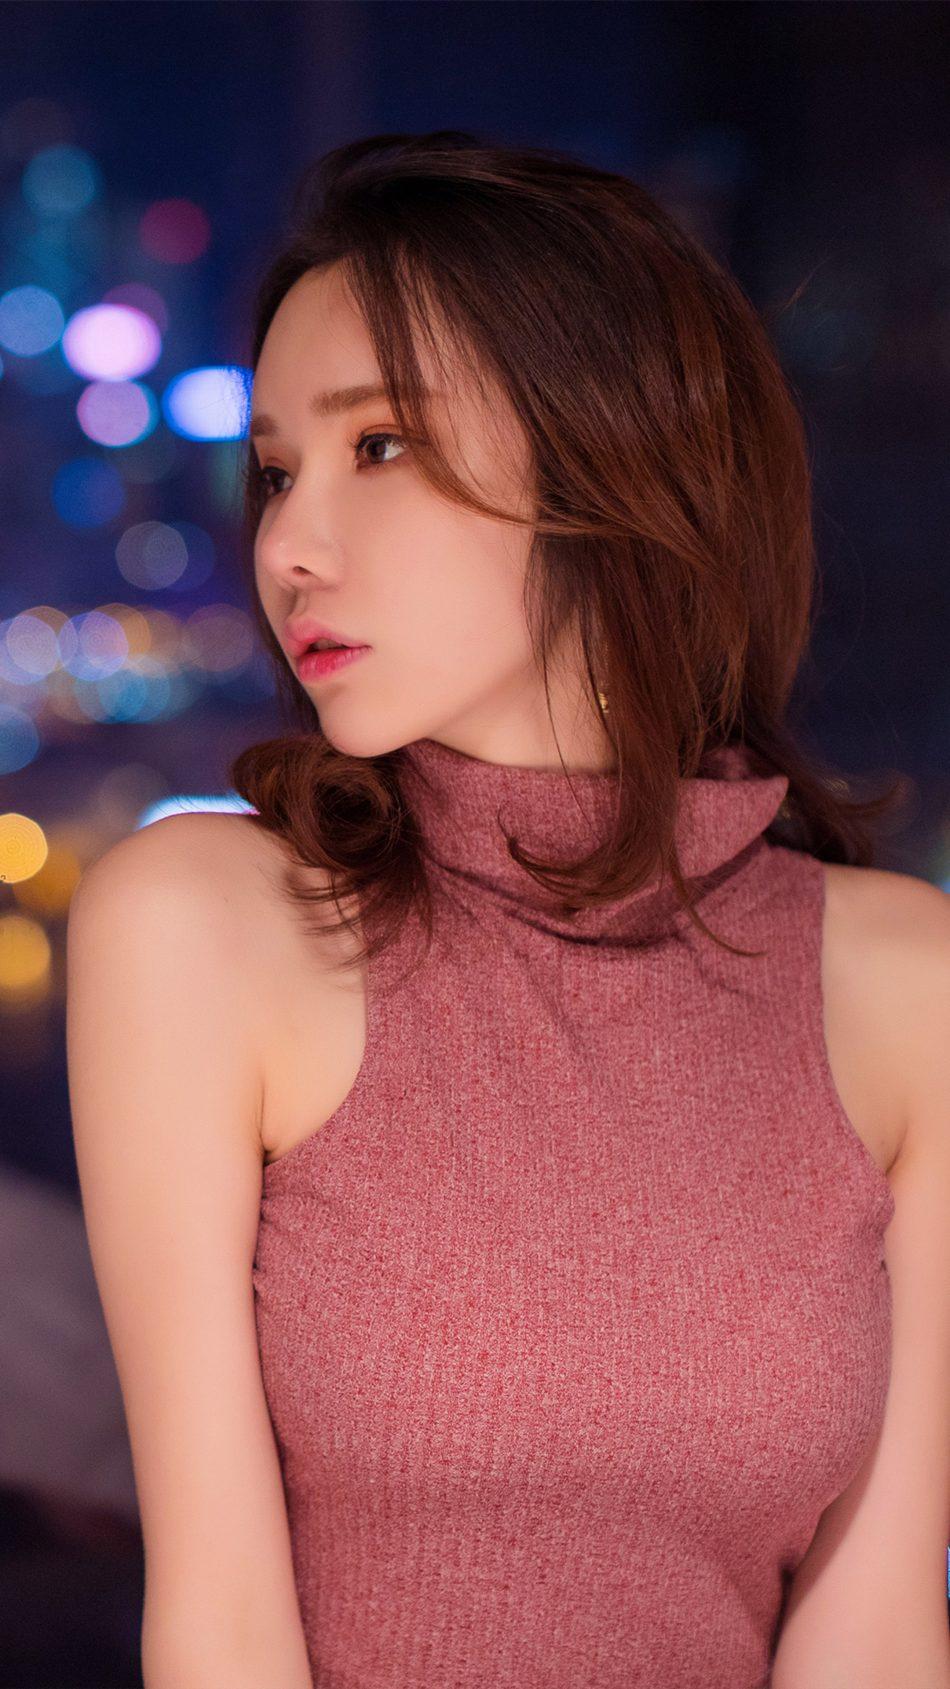 Cute Asian Girl City Background Photohoot Free 4K Ultra HD Mobile